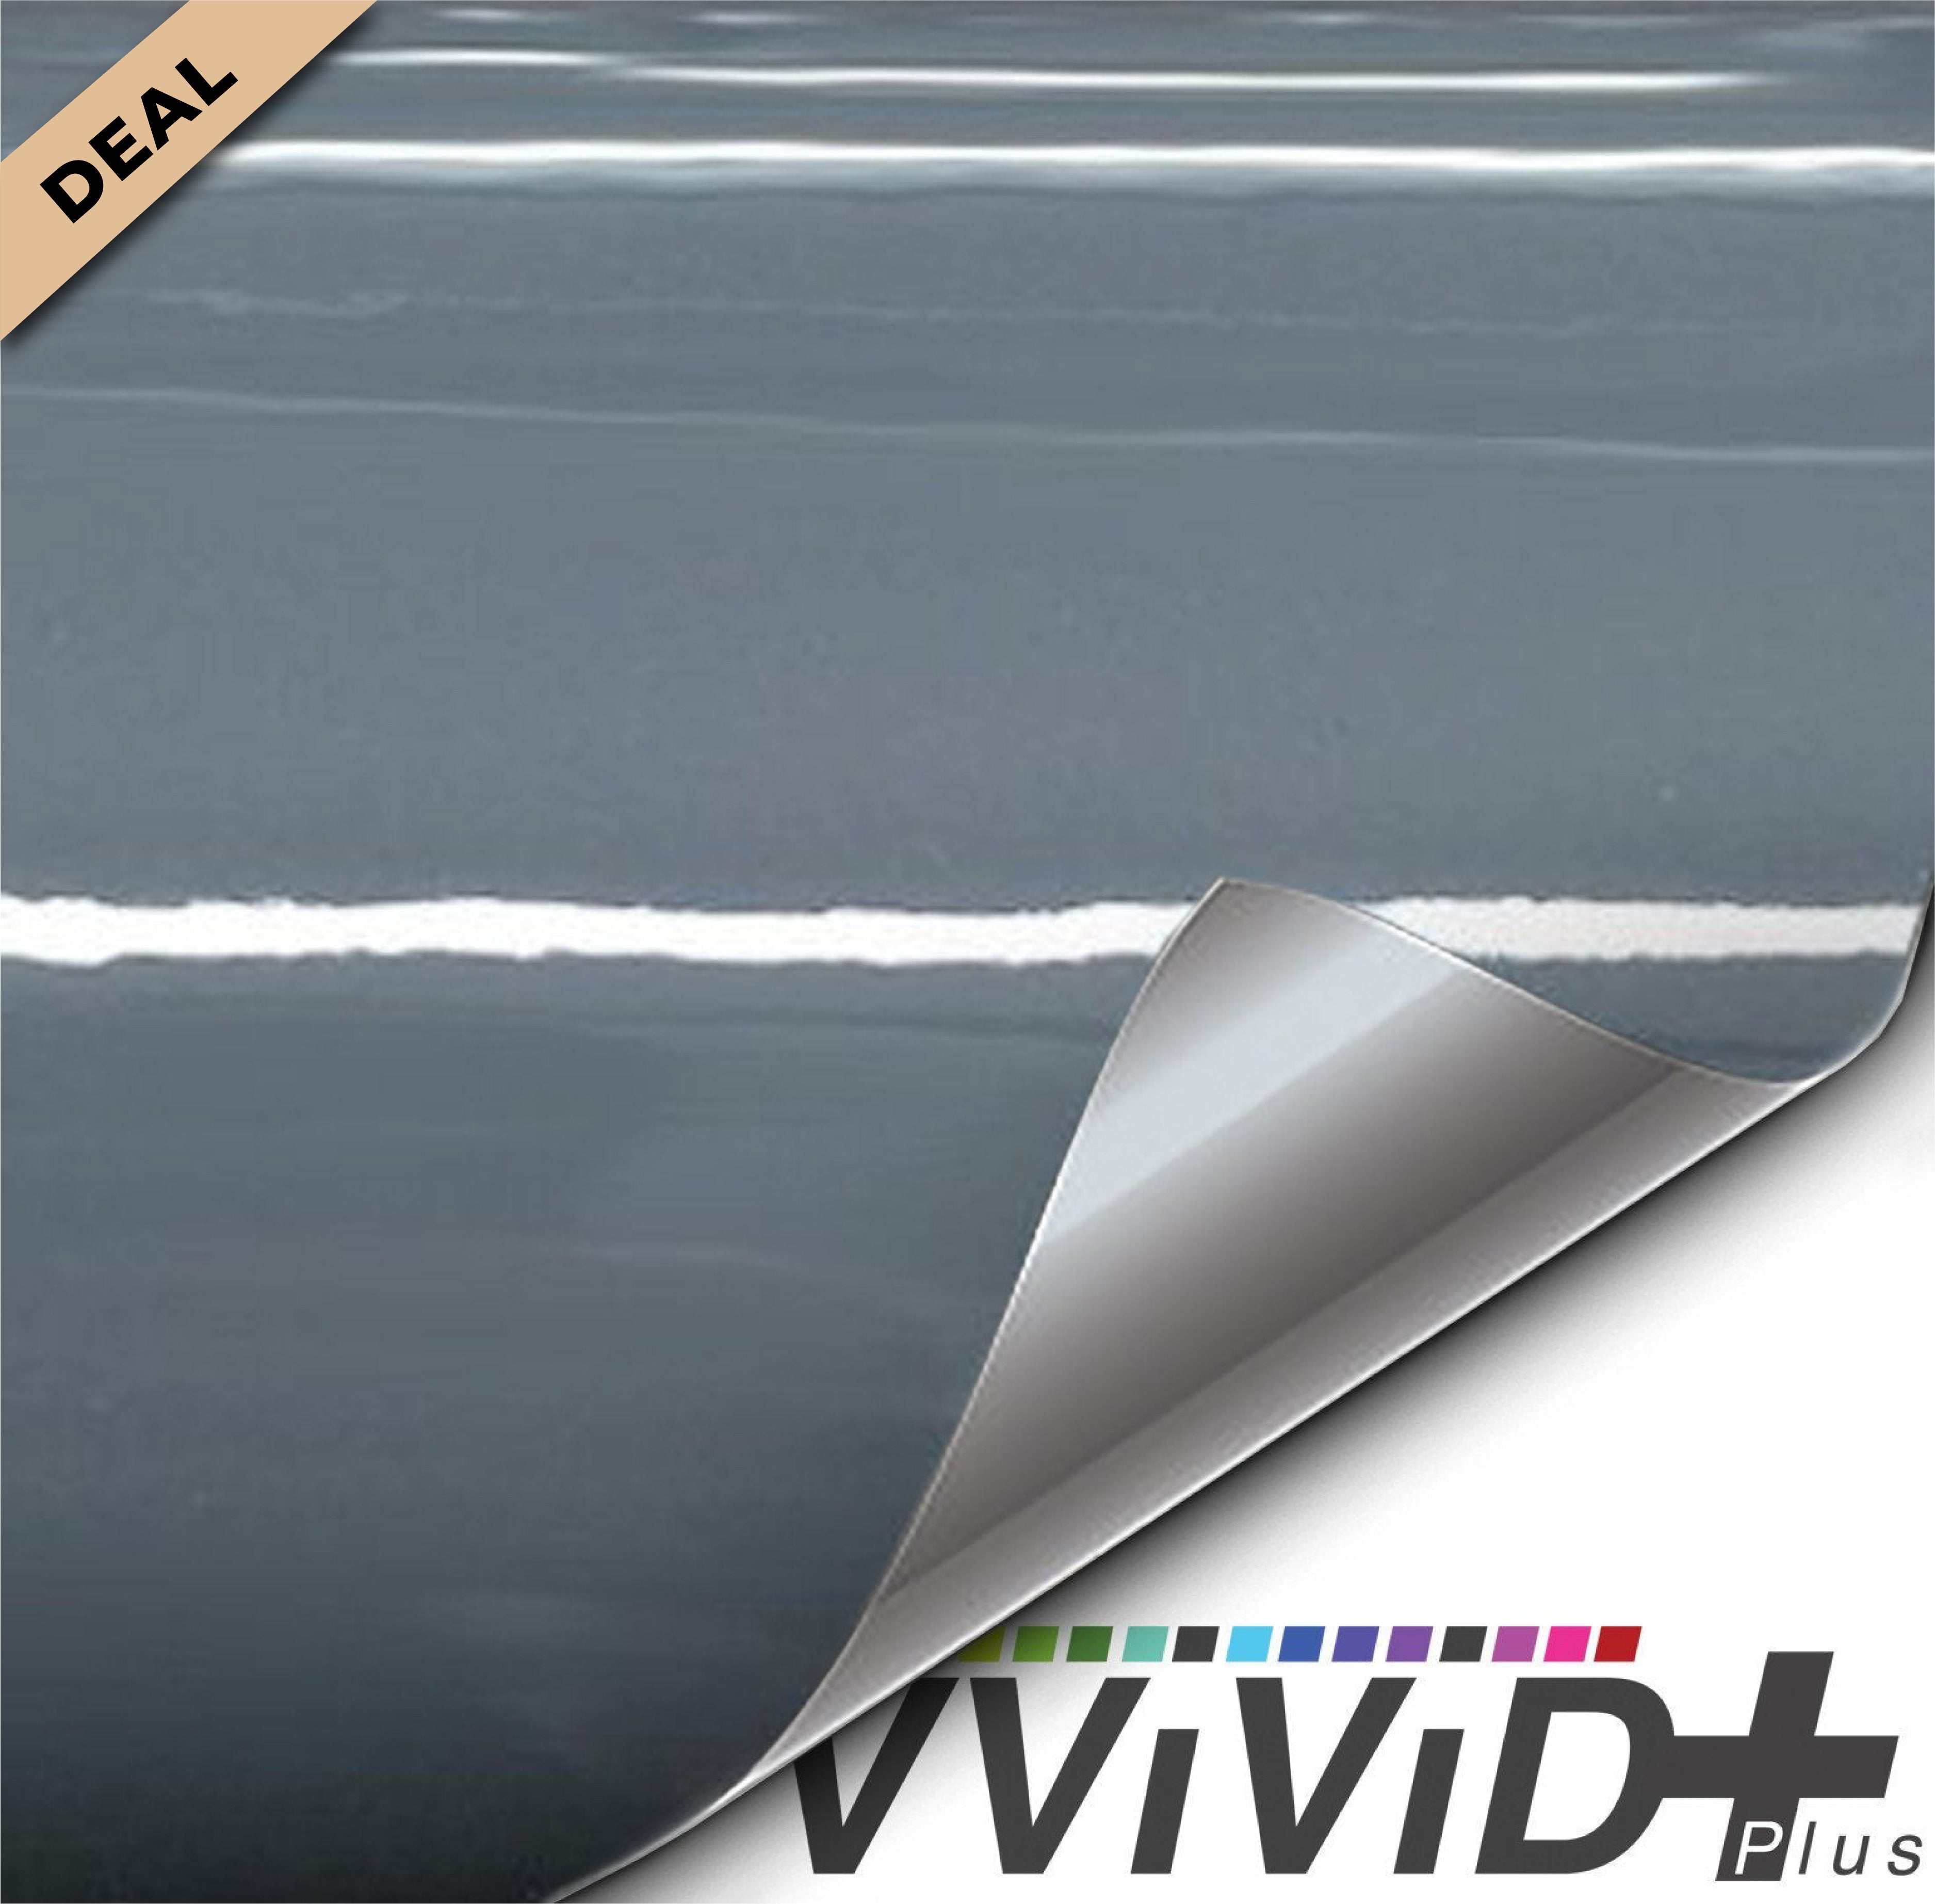 VViViD+ Gloss Slate Grey Grigio Telesto (6ft x 5ft) - W.D-1